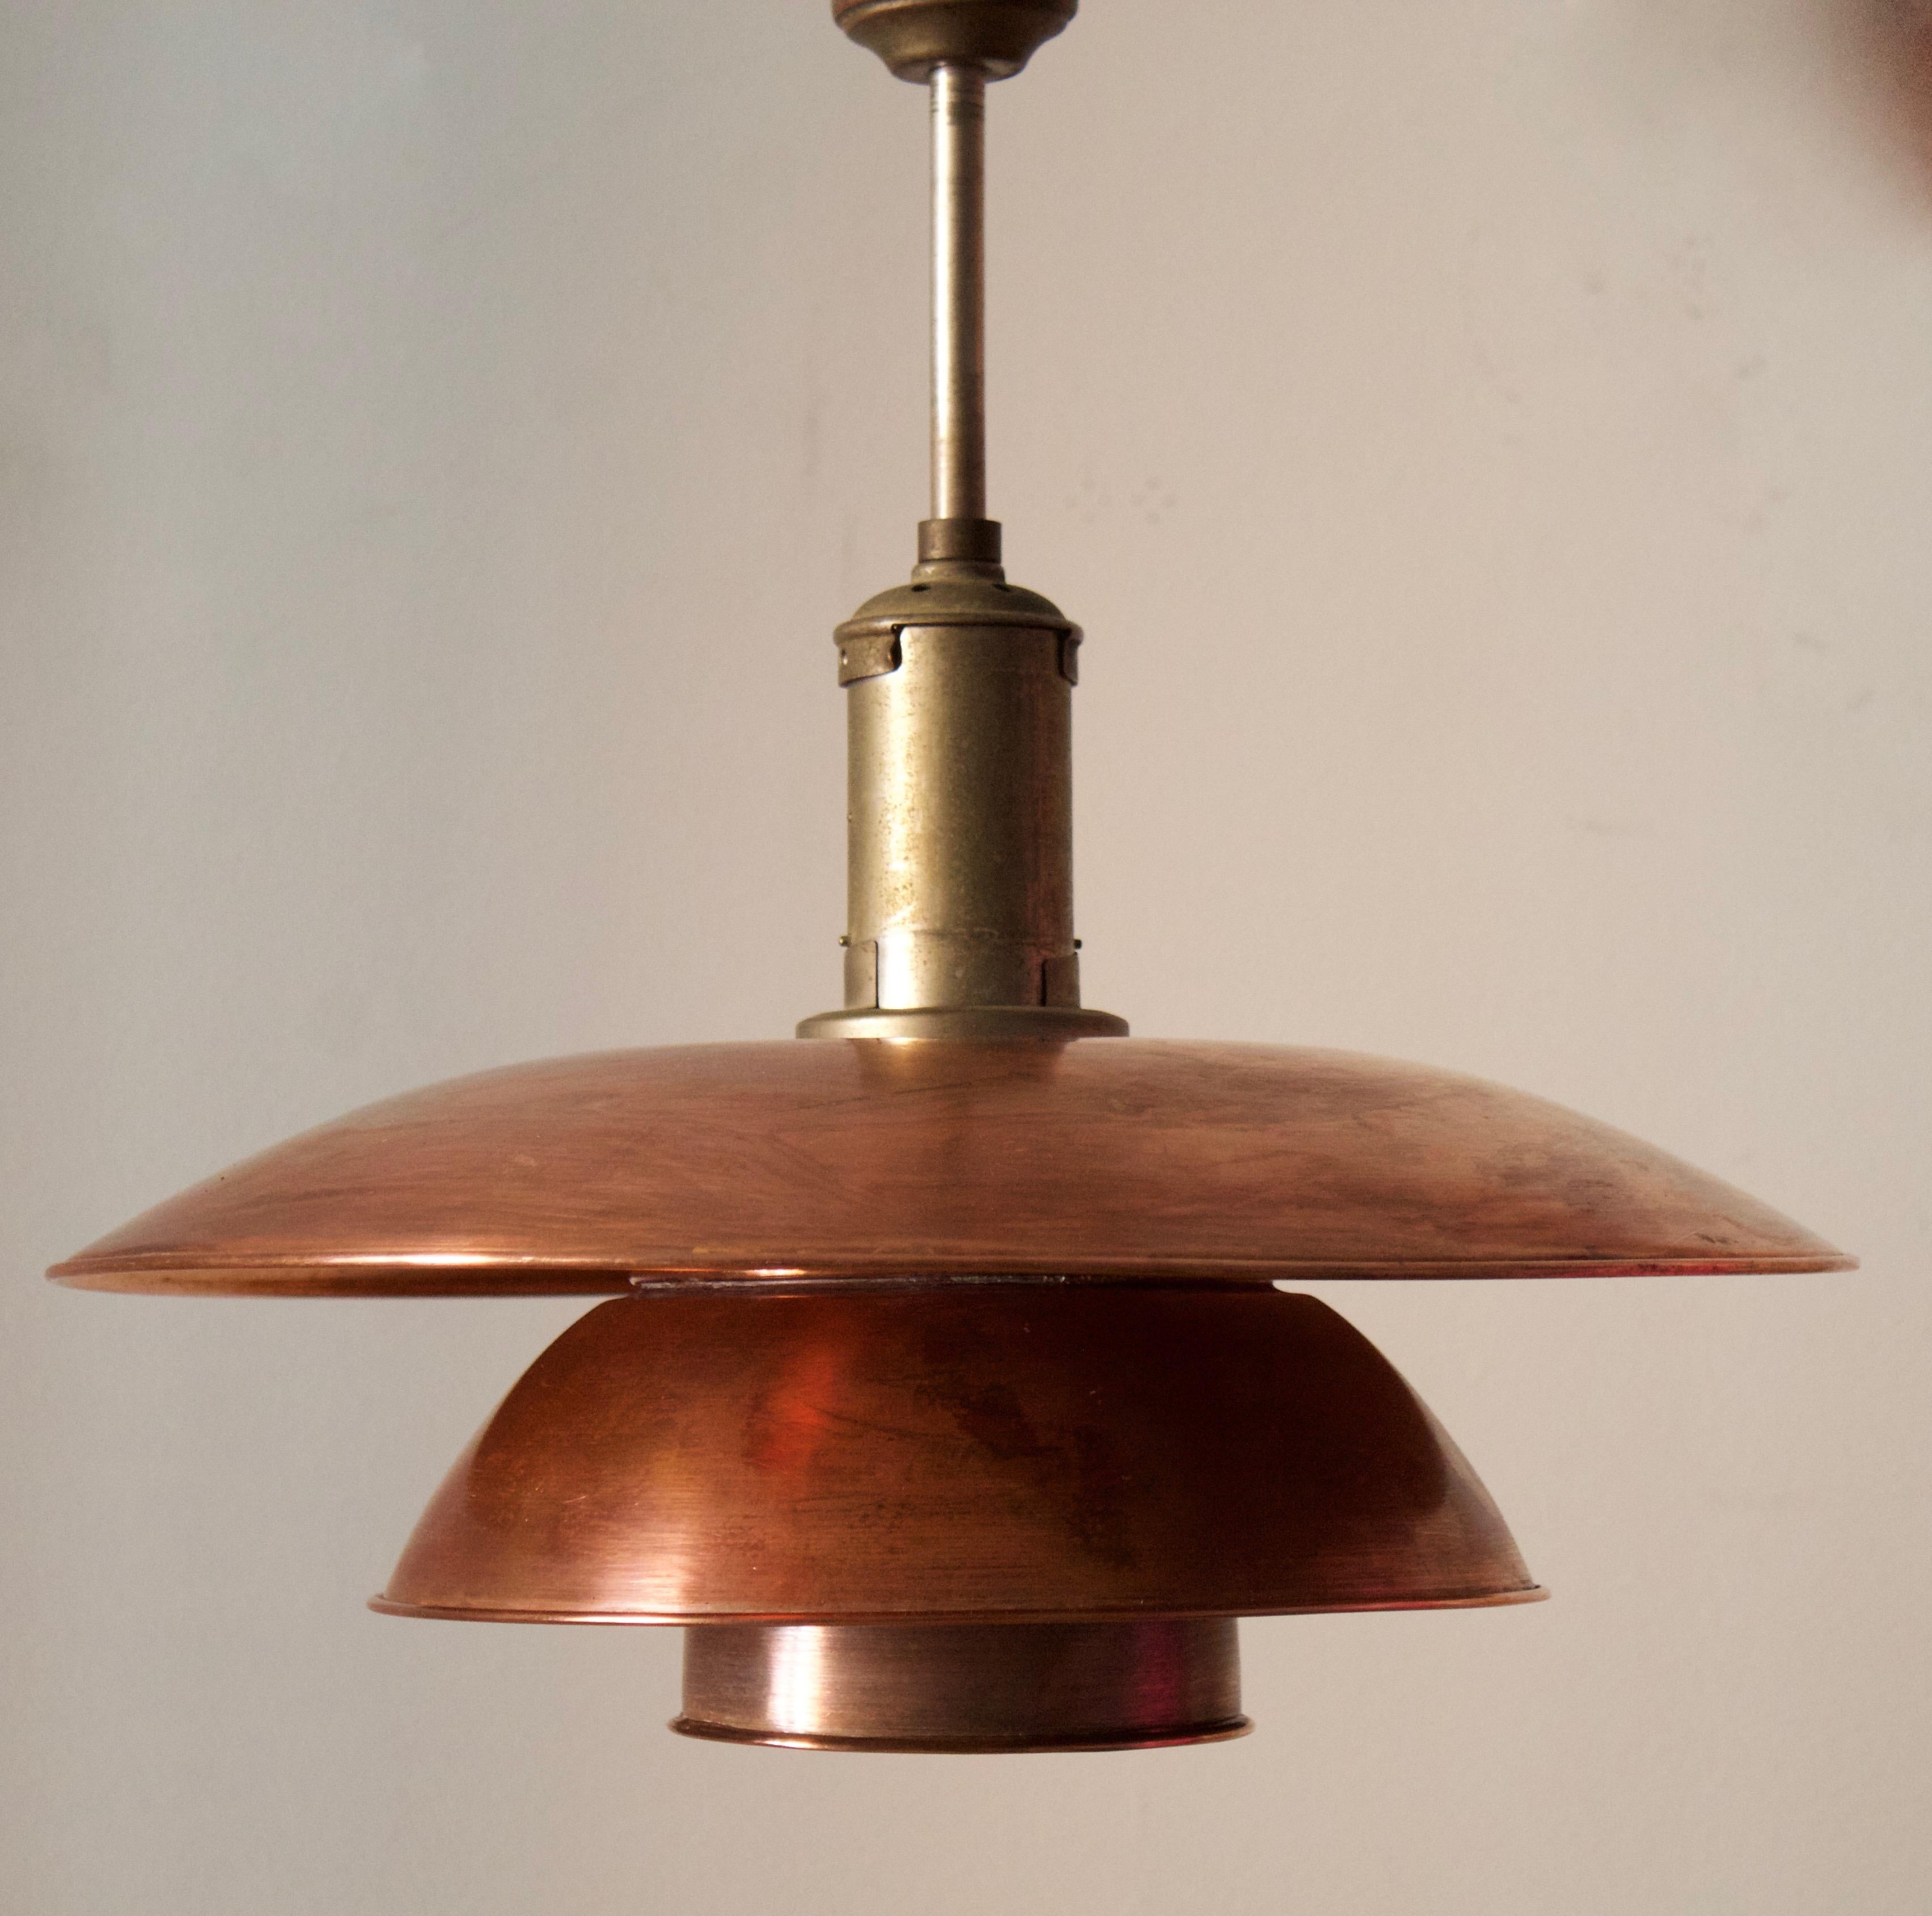 Scandinavian Modern Poul Henningsen, 4/4 Pendant Light, Copper, Nickel-Plated Metal, Denmark, 1930s